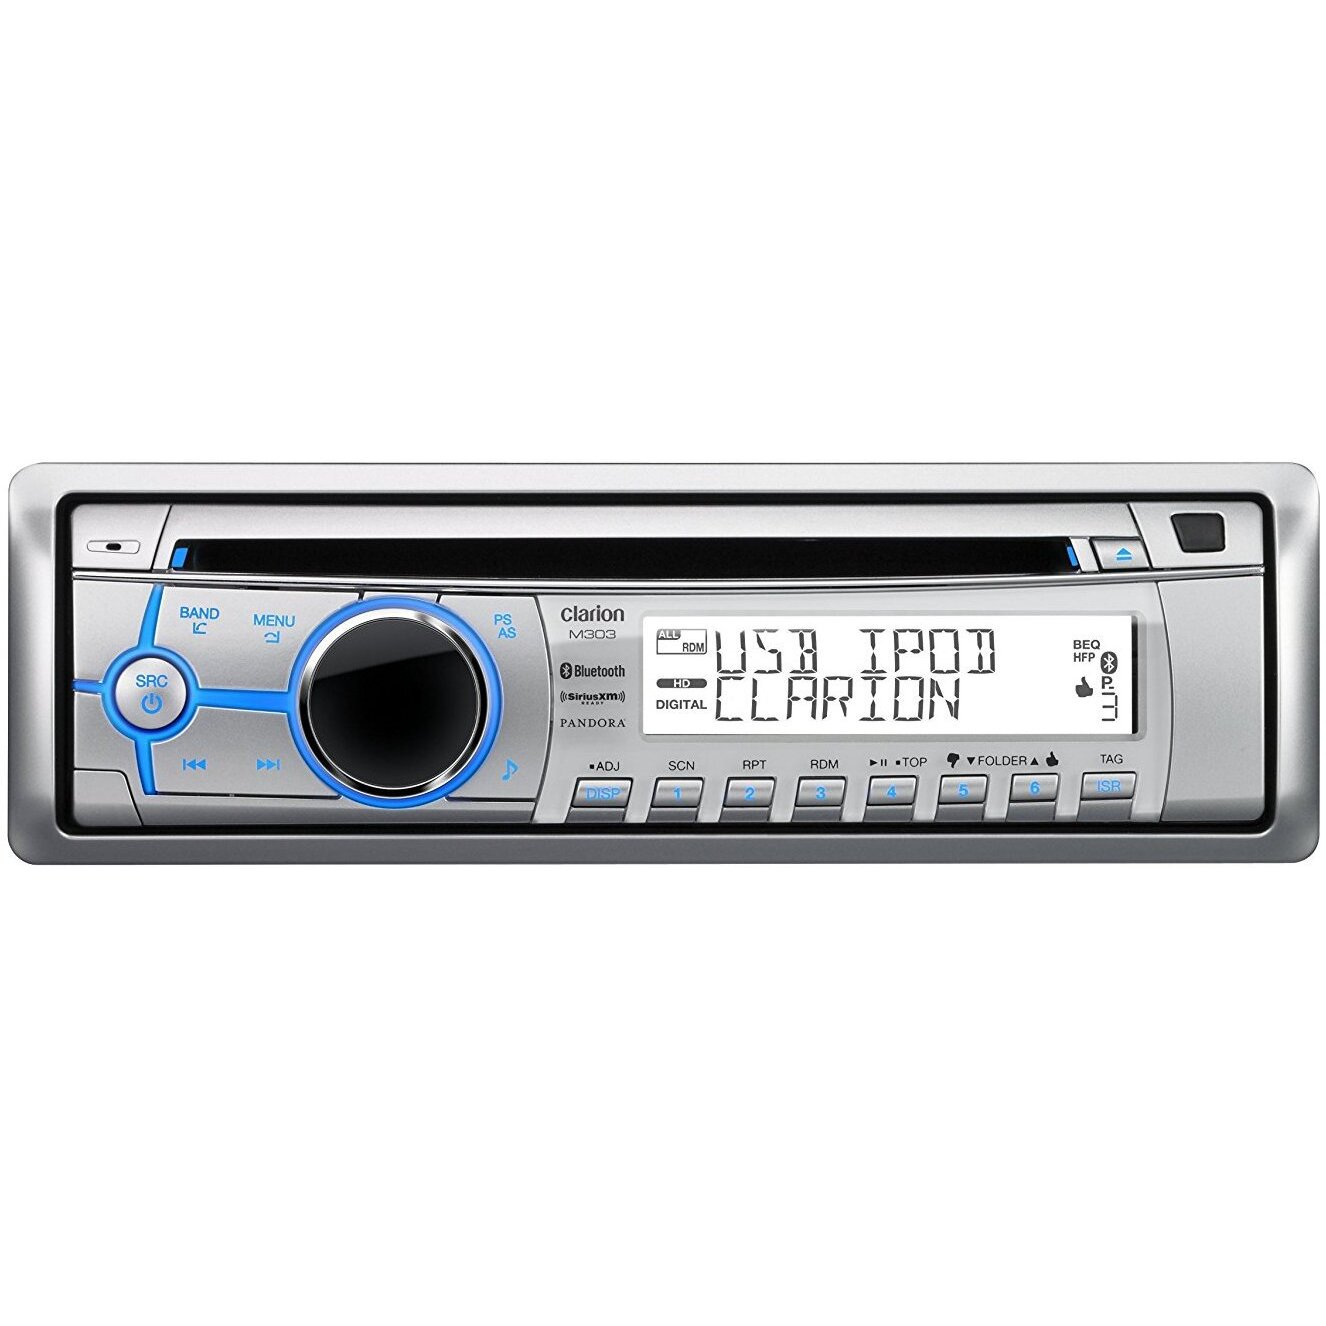 Clarion M303 AM/FM Radio Receiver CD Player USB Port Port Bluetooth iPod/iPhone Control Pandora SiriusXM Satellite Ready 180 Watt Marine Stereo